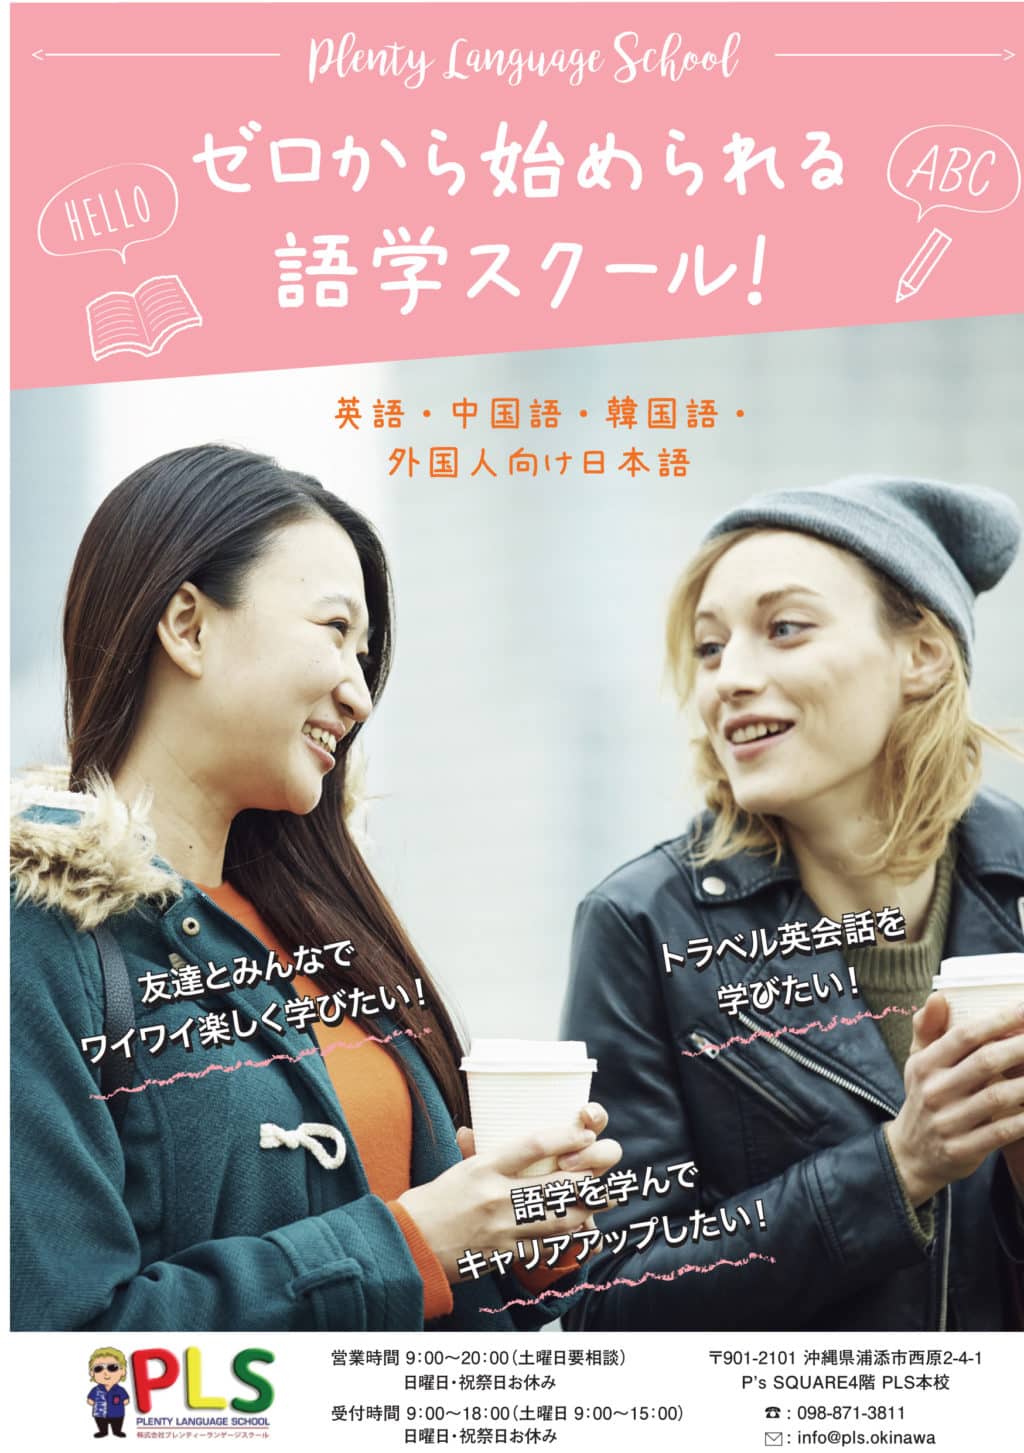 Total Okinawa Magazine July 2017 - Ads from Plenty Language School